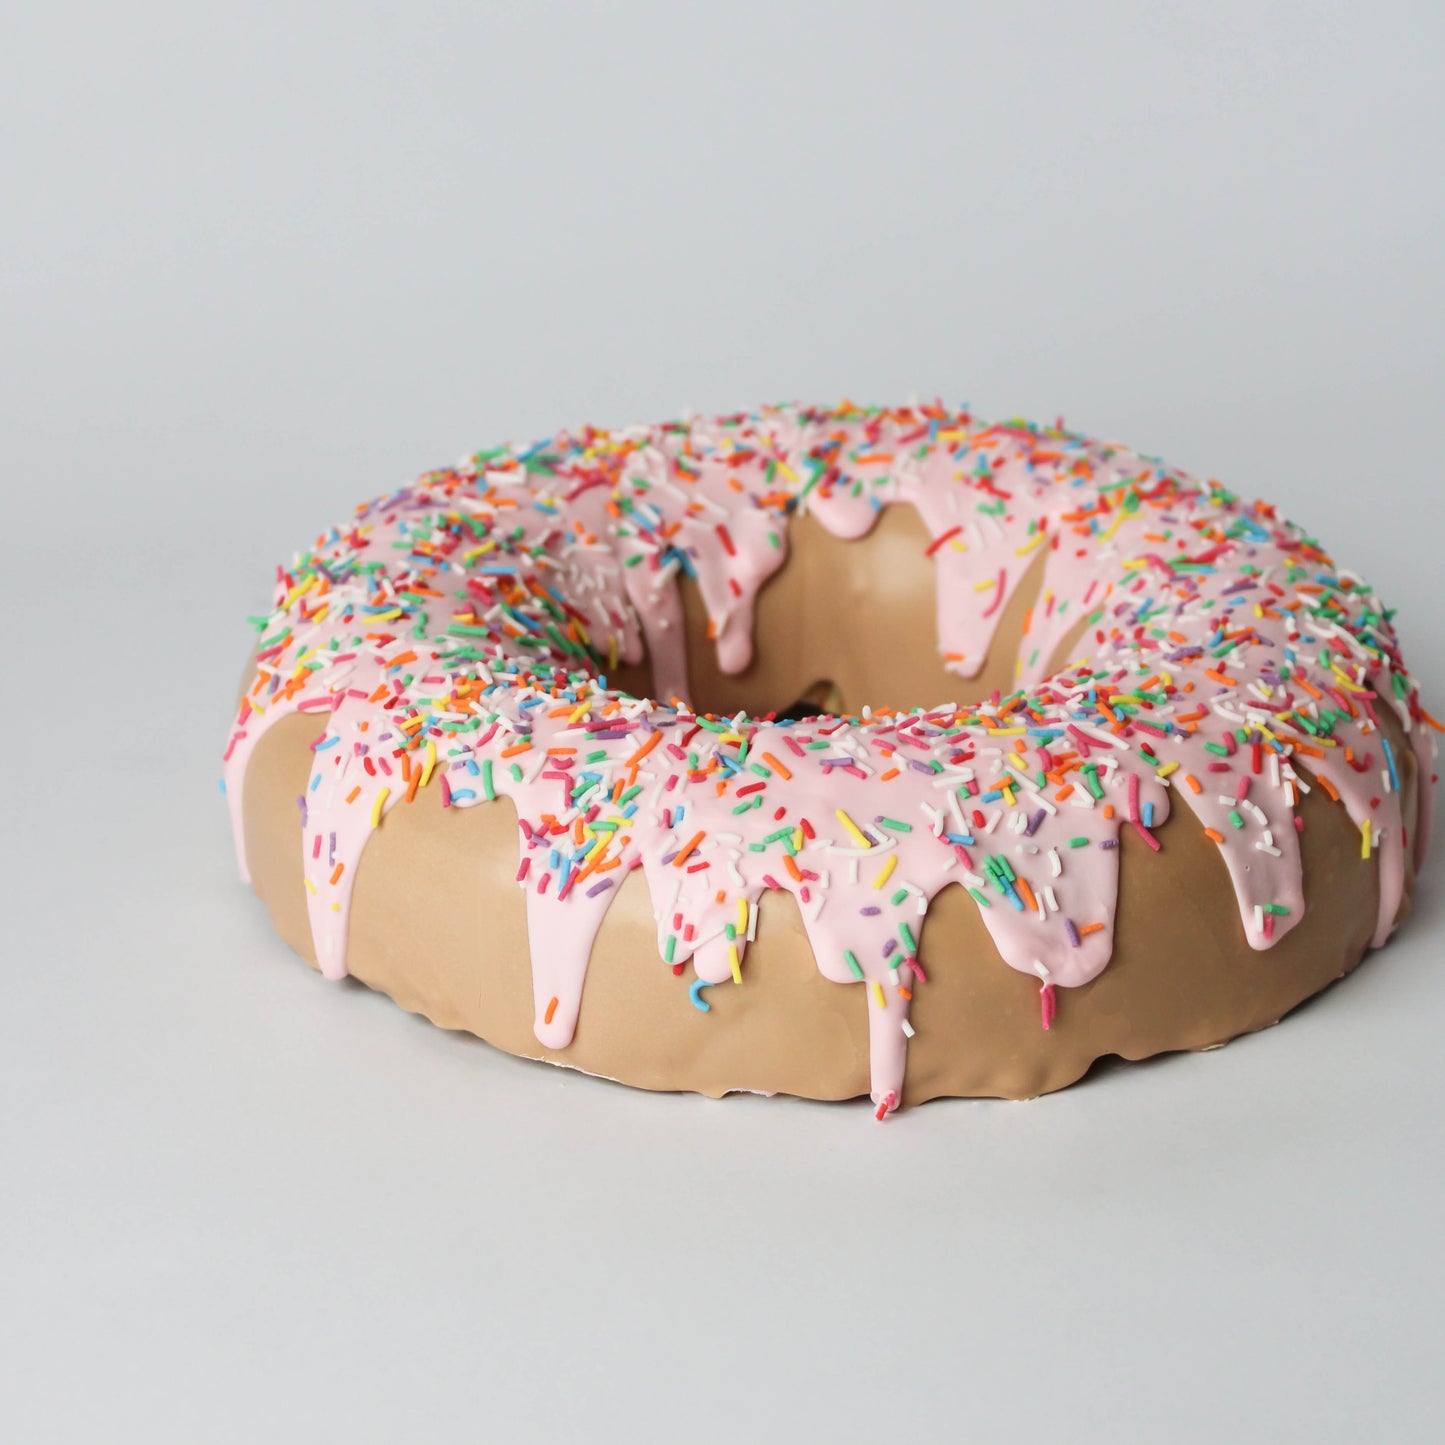 Giant Doughnut Cake Made With Edible Bikkie Batter